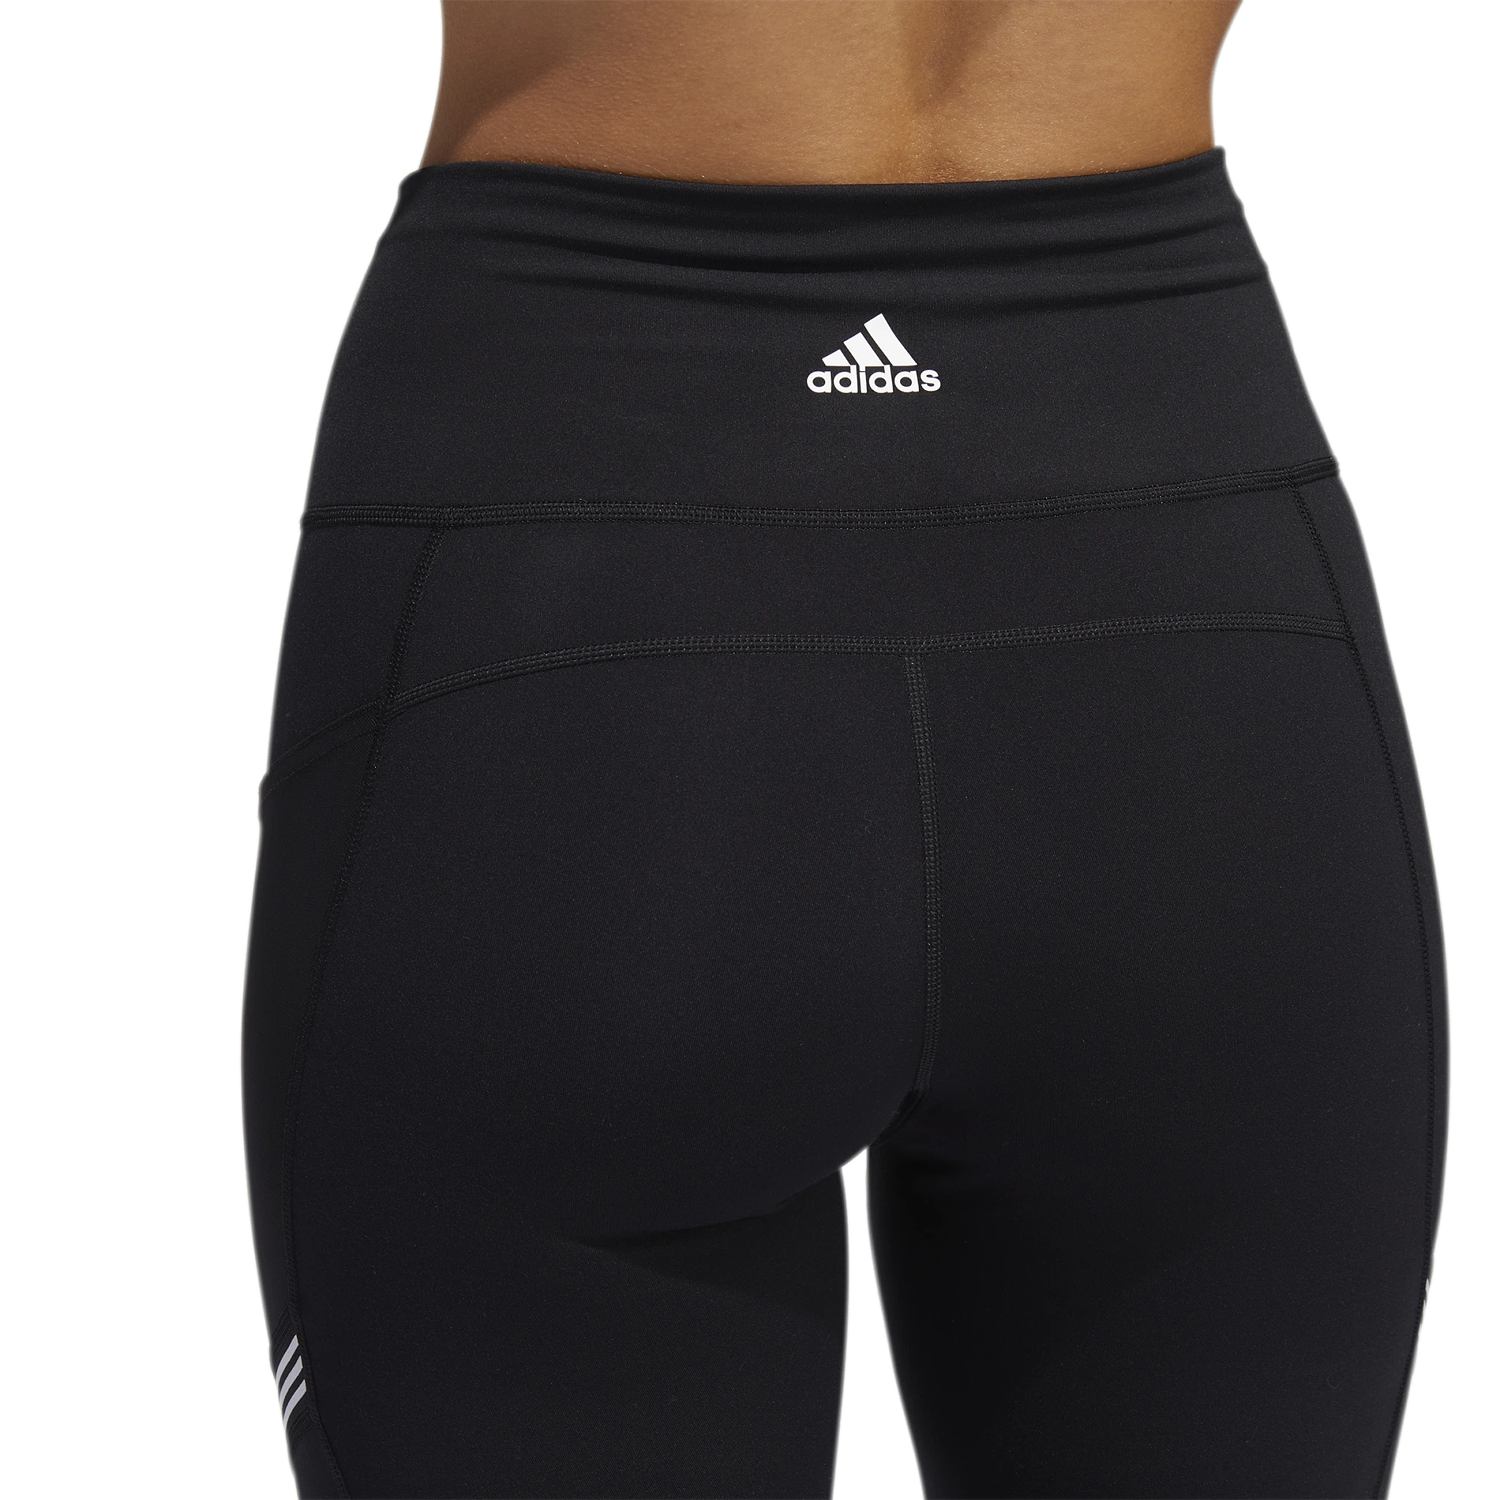 Adidas Women's Believe This High Rise 3-Stripes Tights, Black | eBay